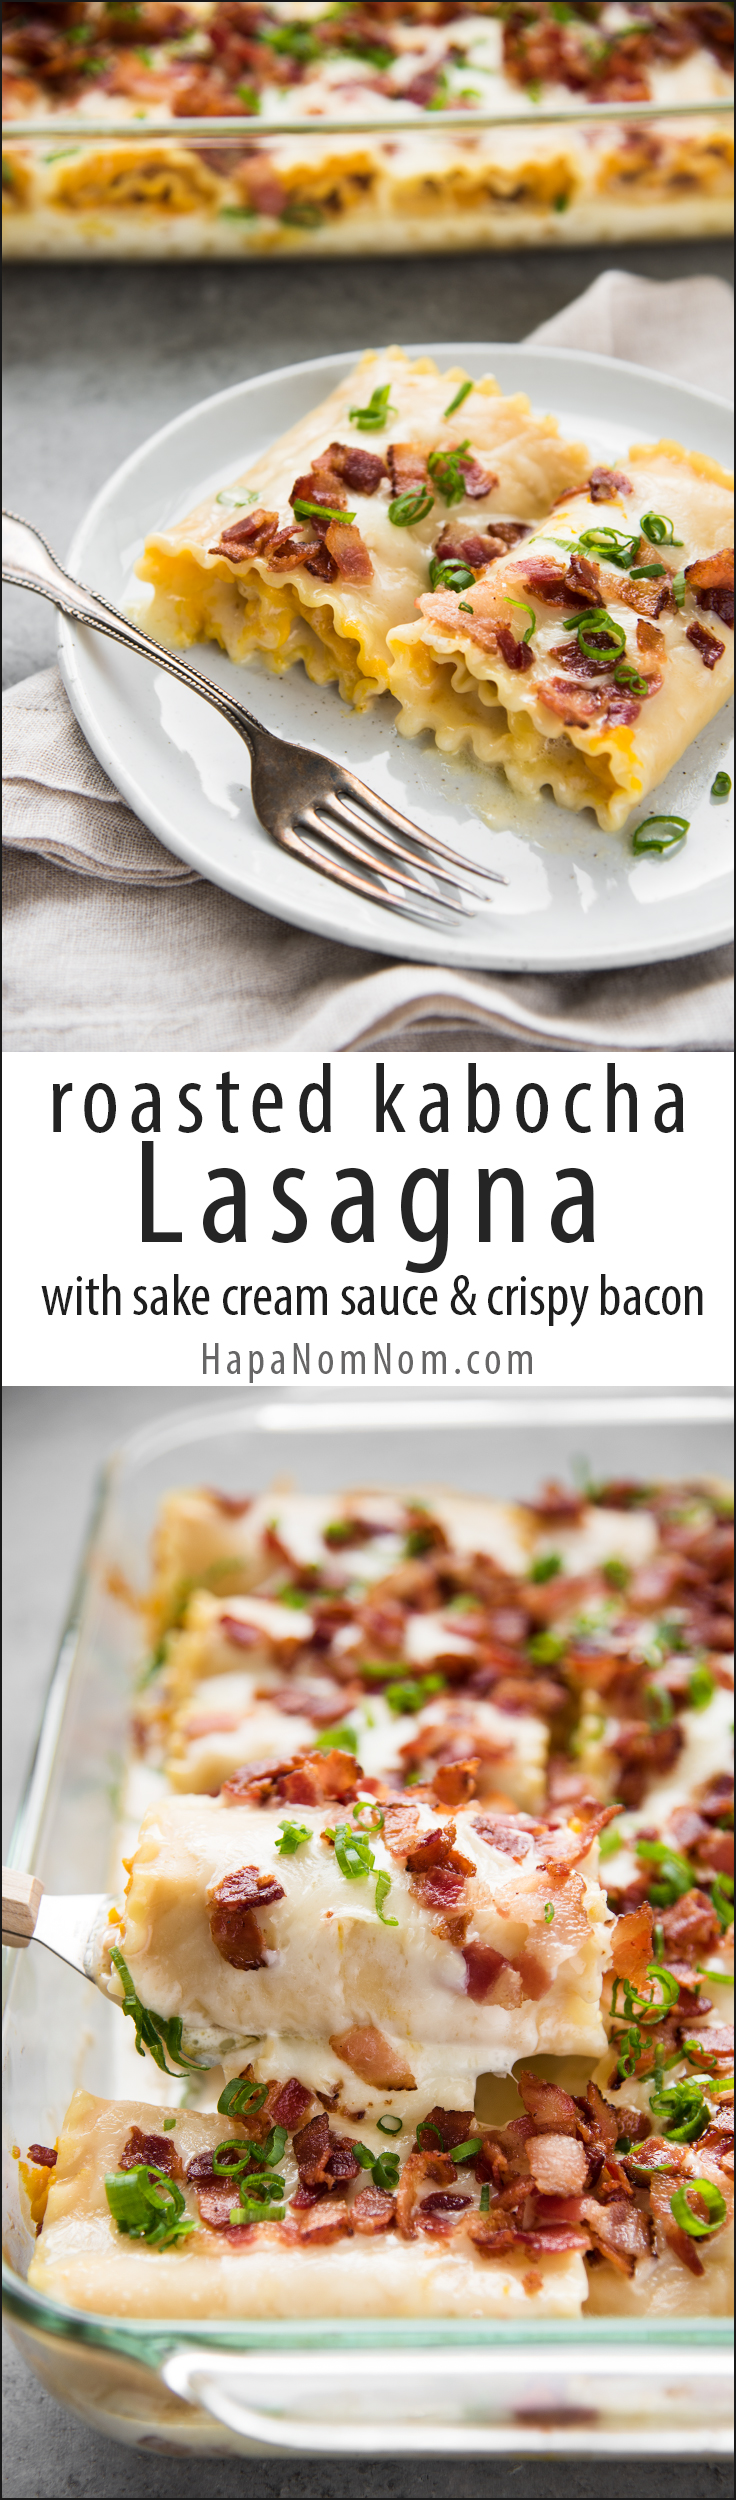 Roasted Kabocha Lasagna with Sake Cream Sauce and Crispy Bacon